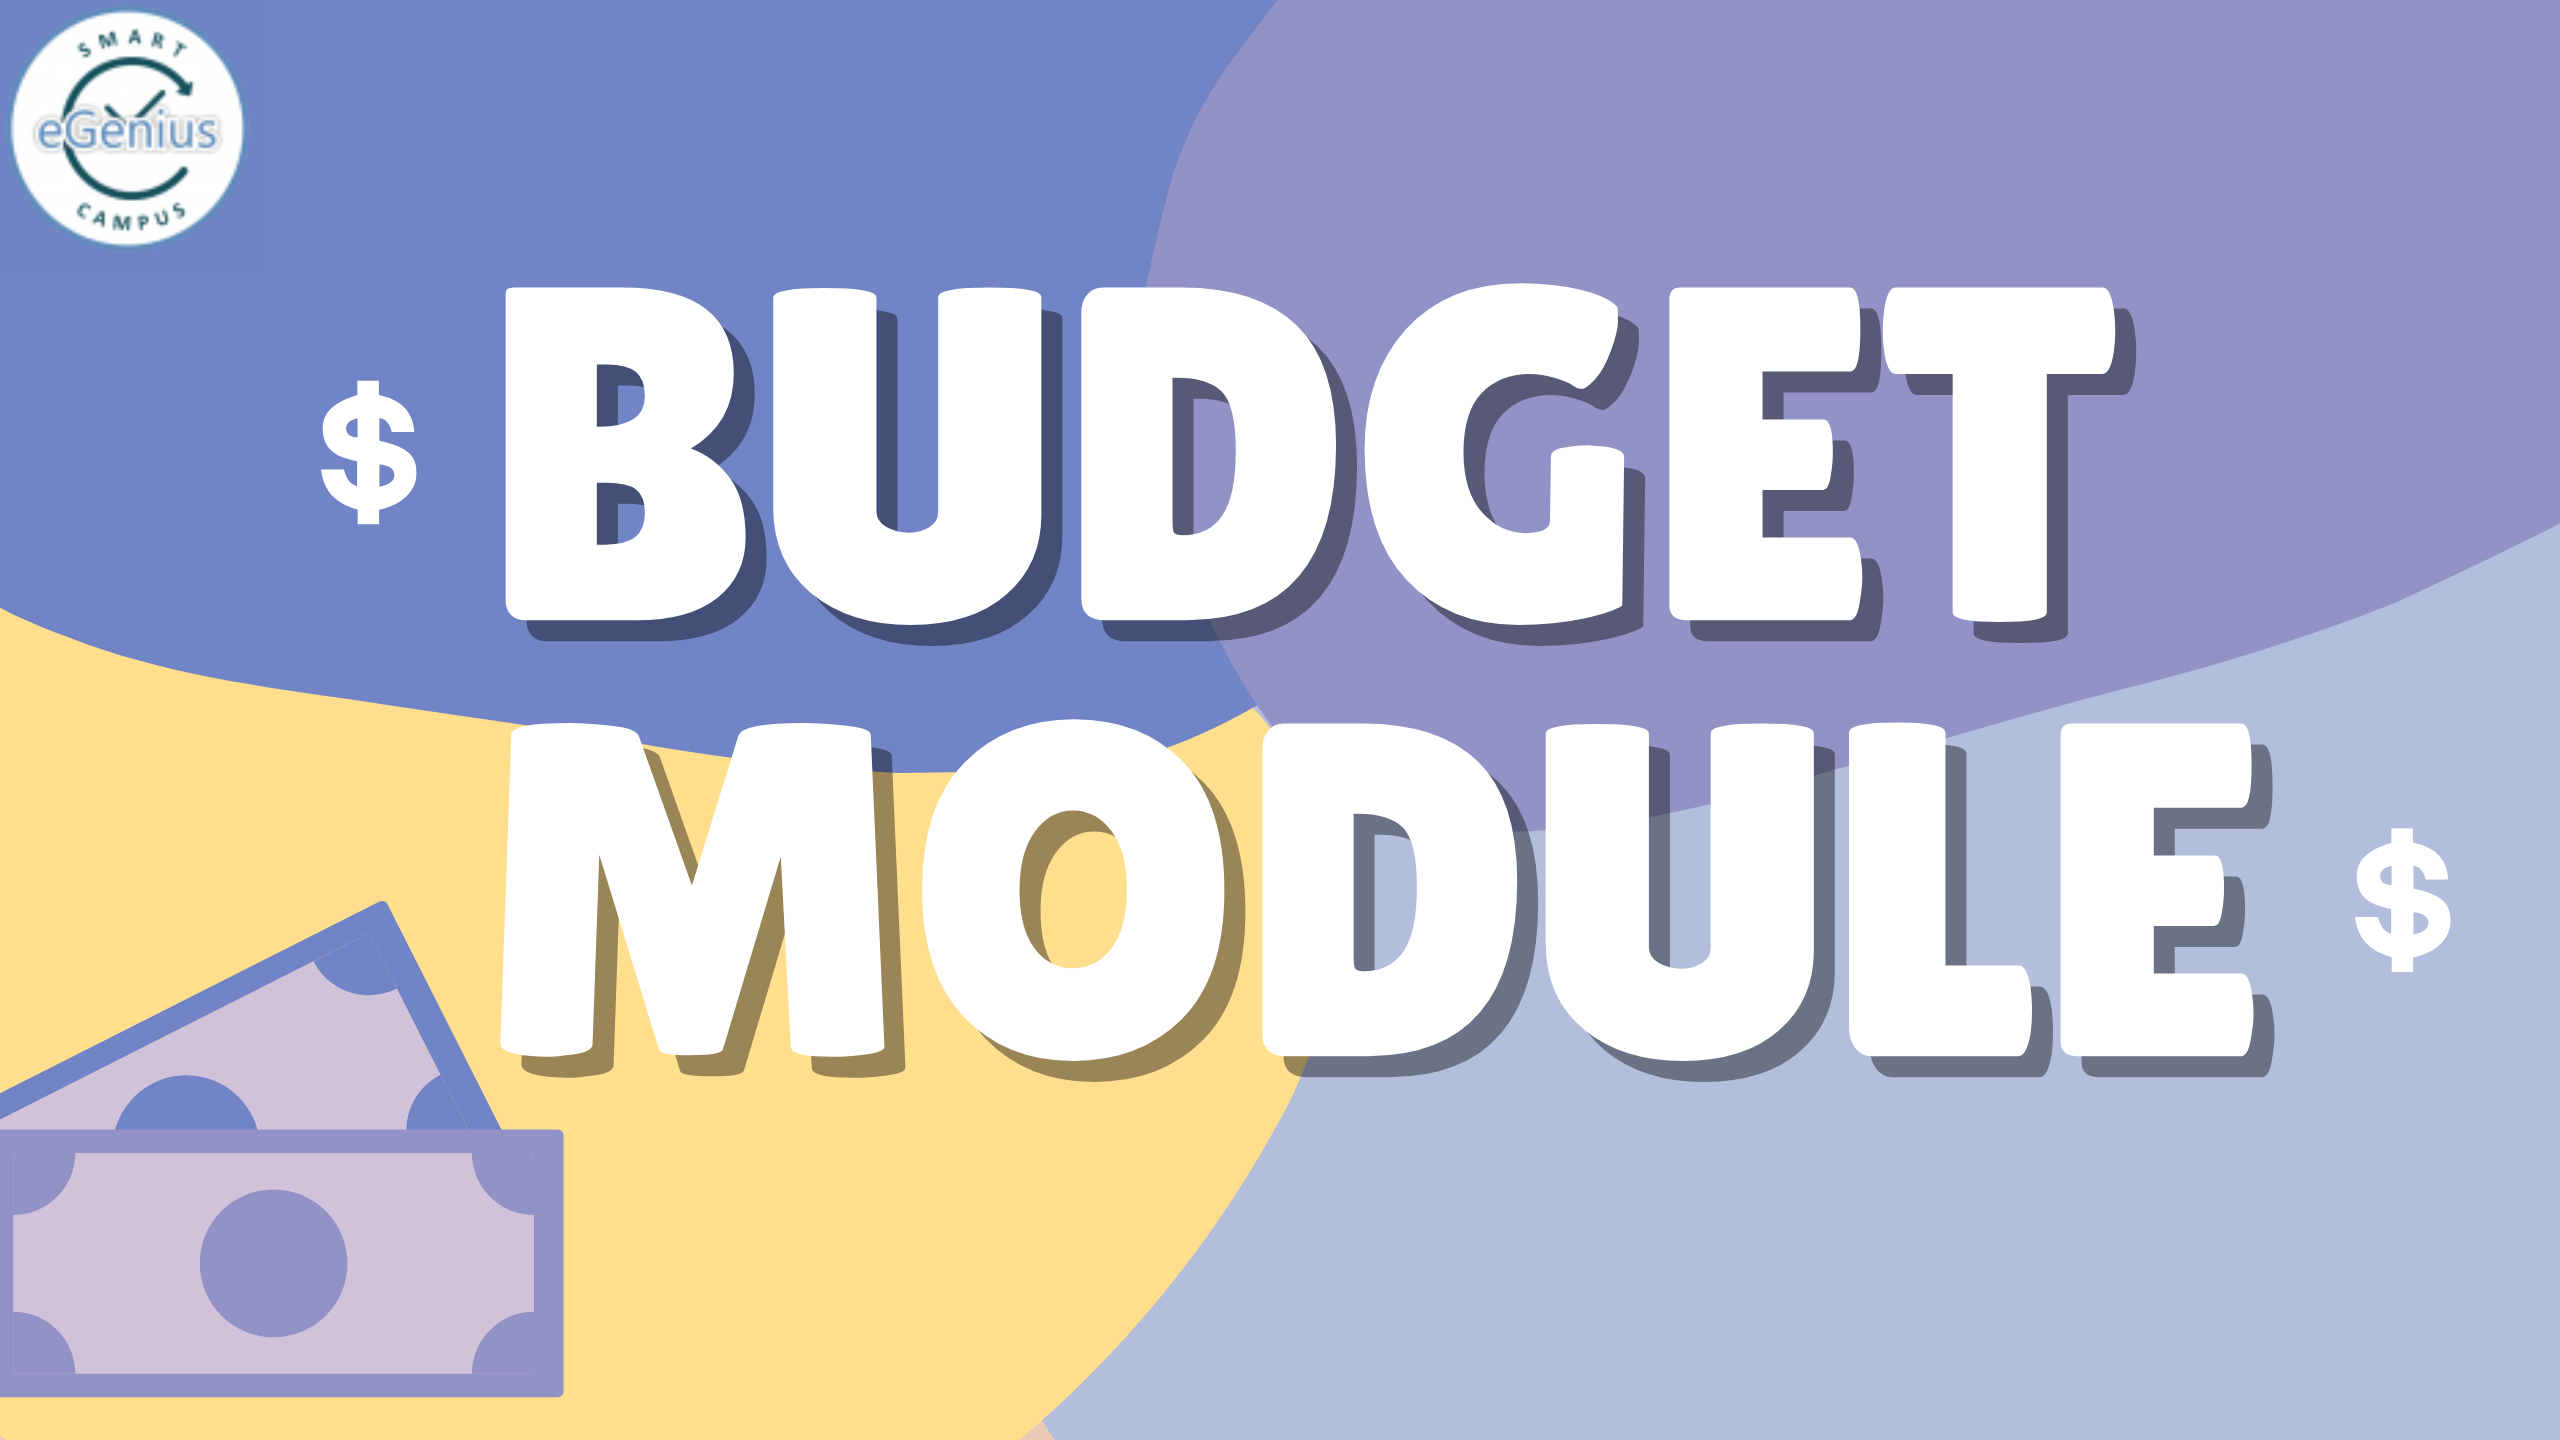 Budget Module